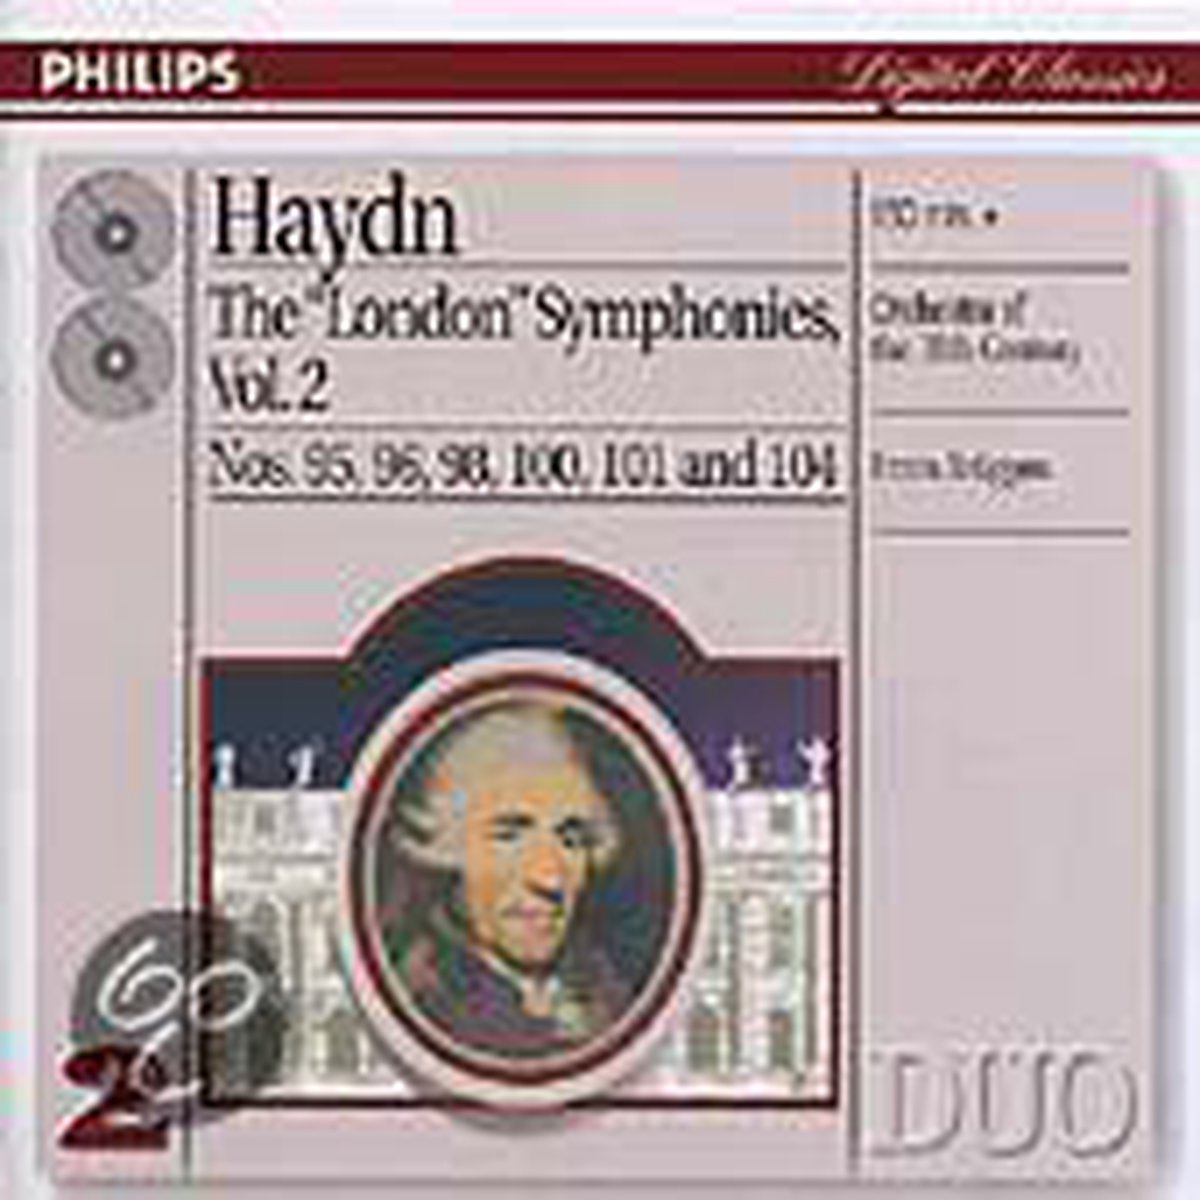 Haydn: The London Symphonies Vol 2 / Frans Br¿ggen et al - Orchestra Of The 18Th Century